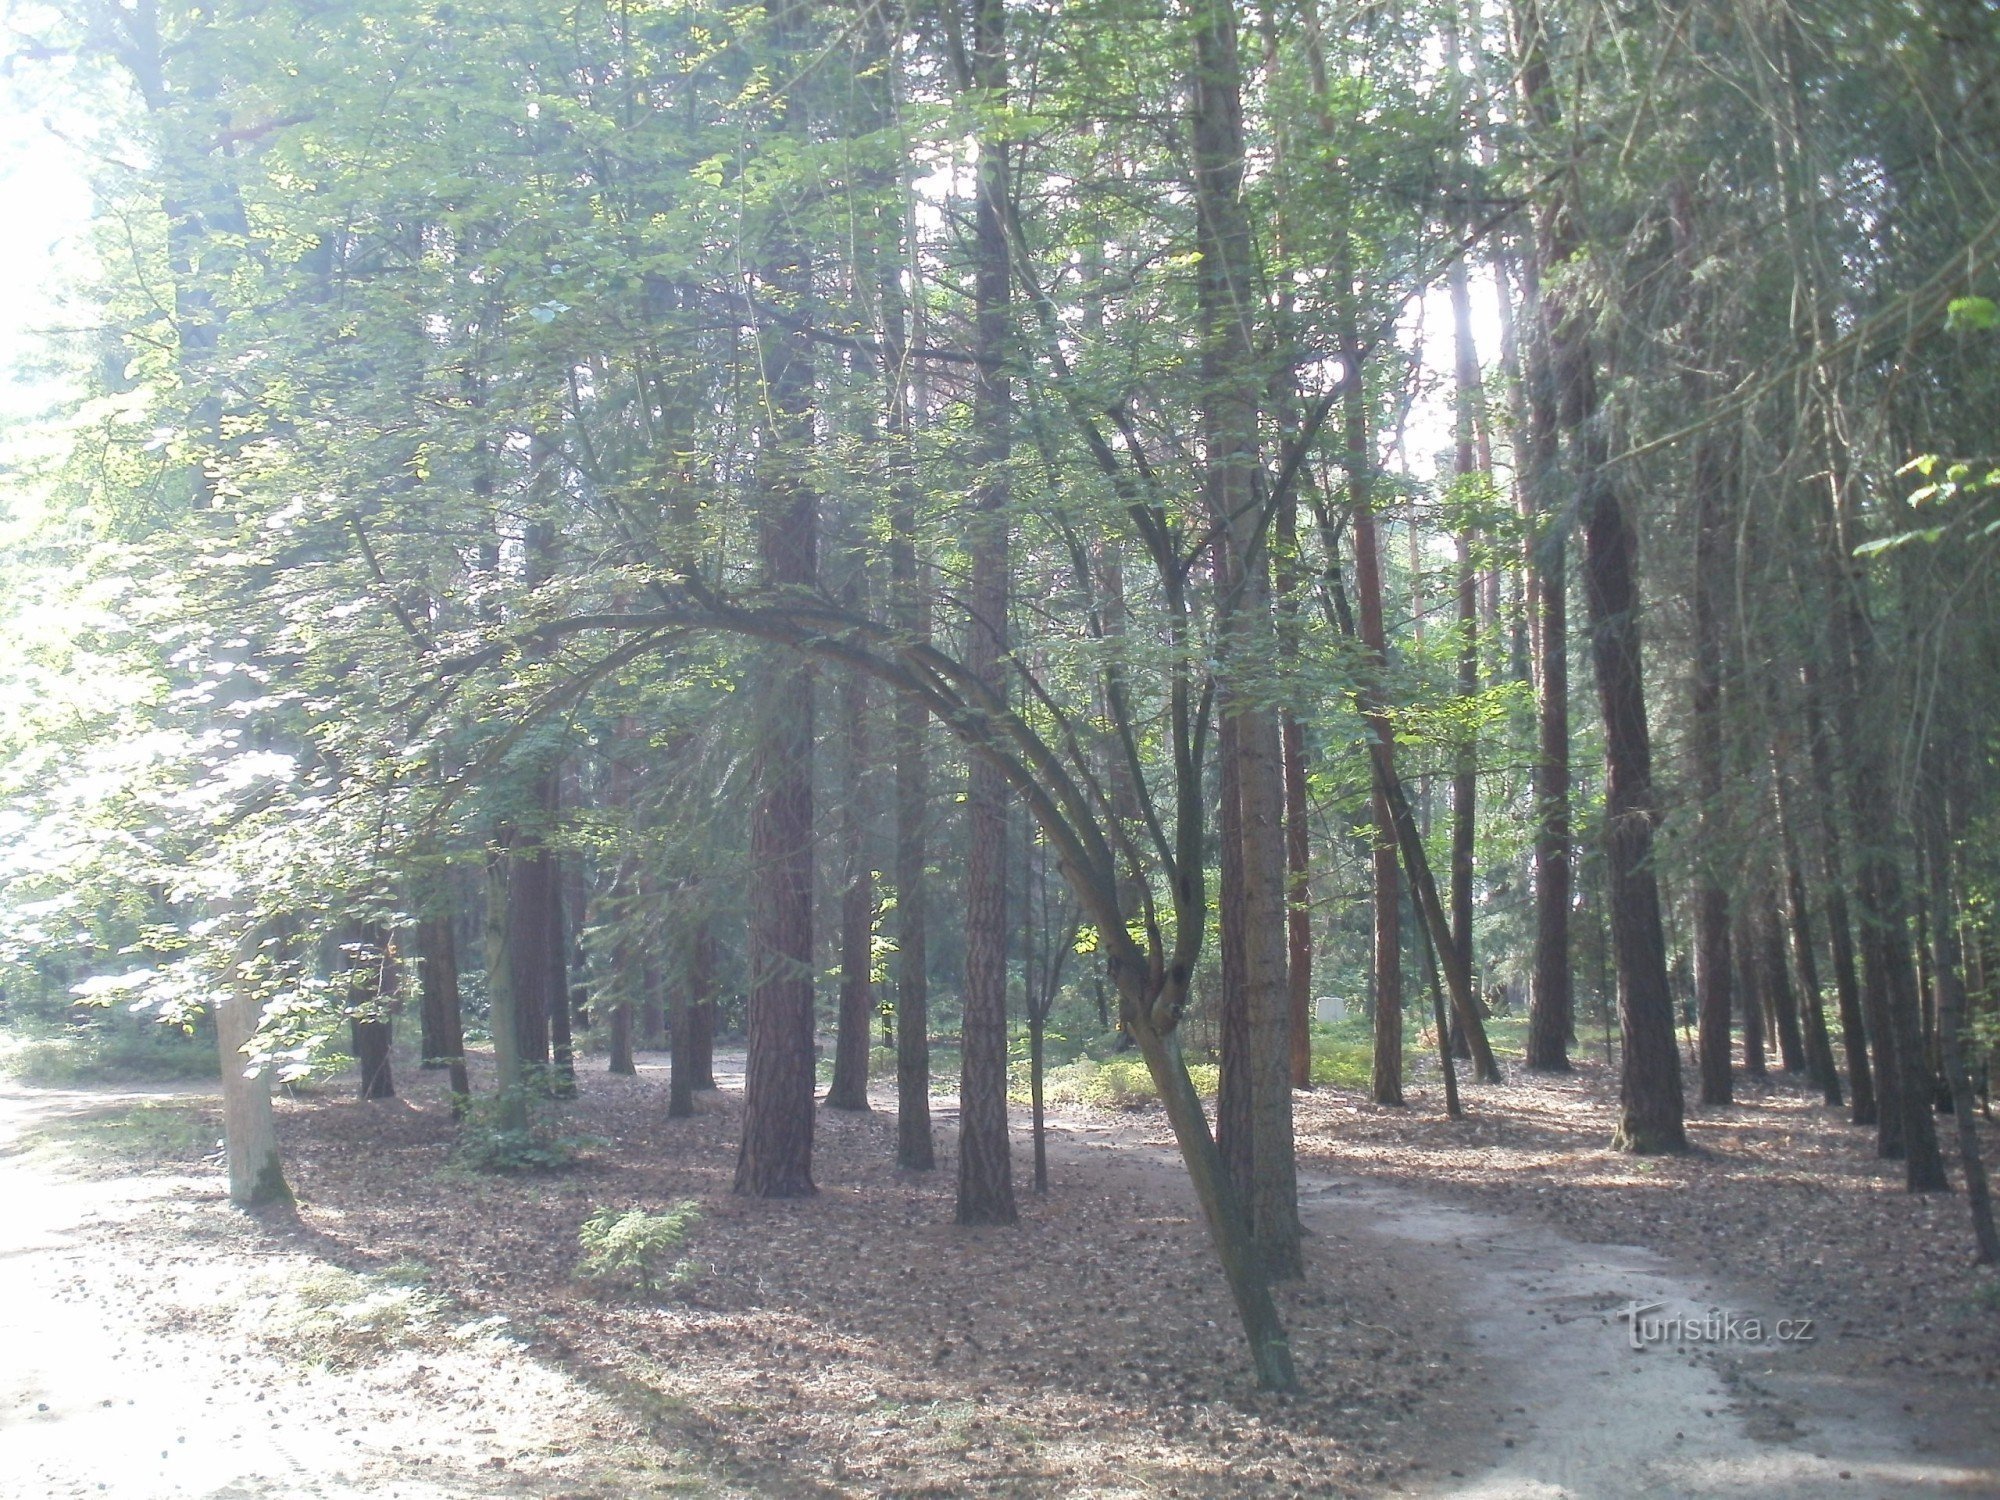 Hradec Králové - forest cemetery